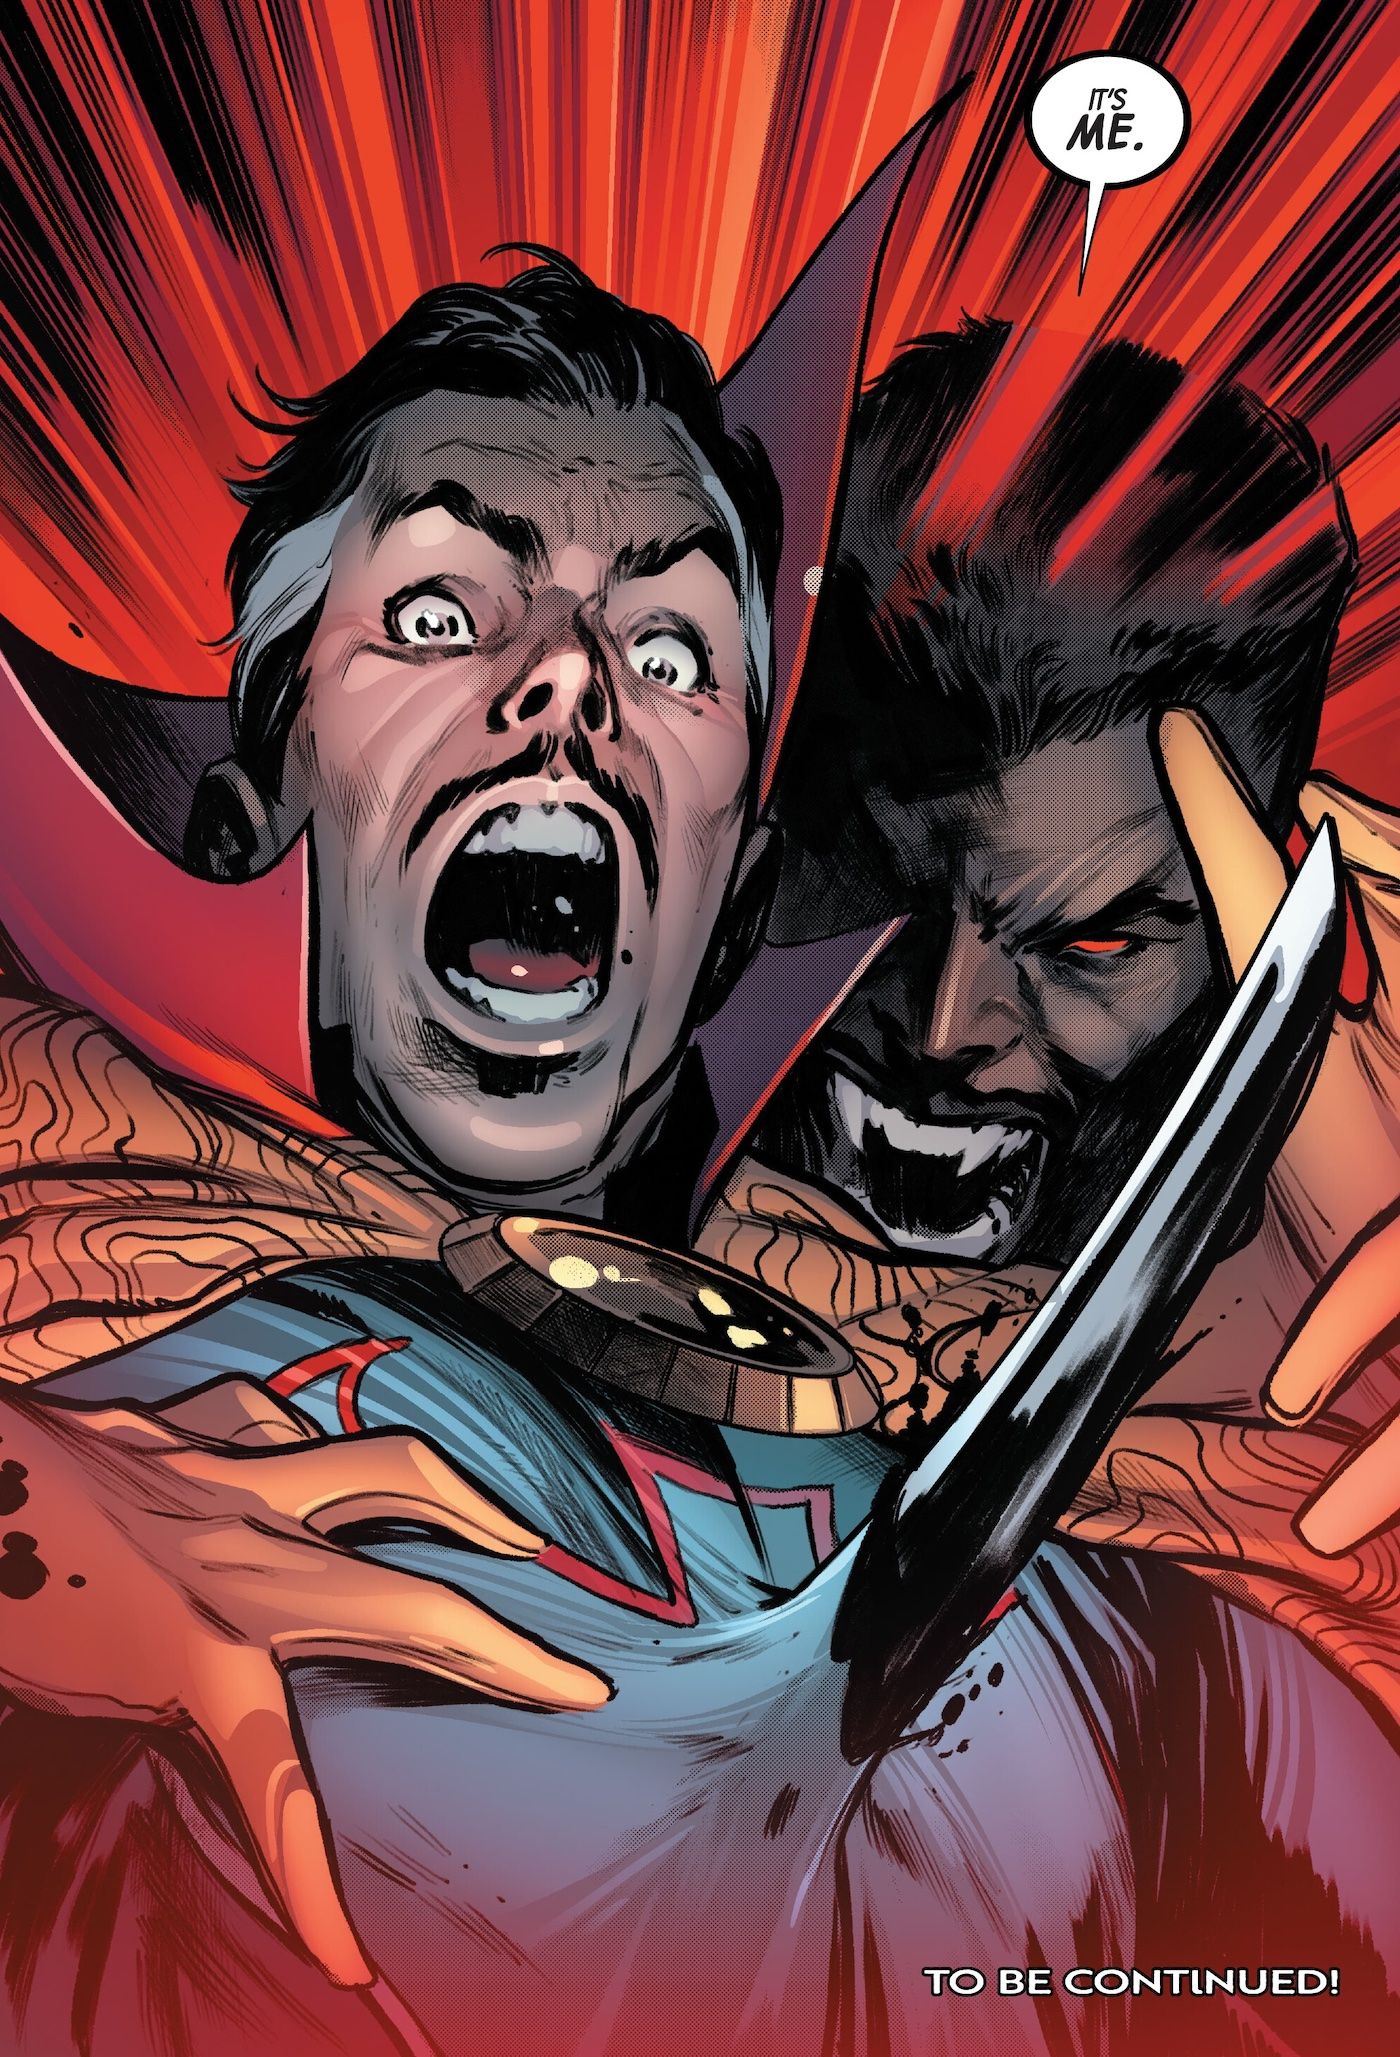 Blade stabs Doctor Strange, revealing himself to be the villain of Marvel's Blood Hunt crossover.